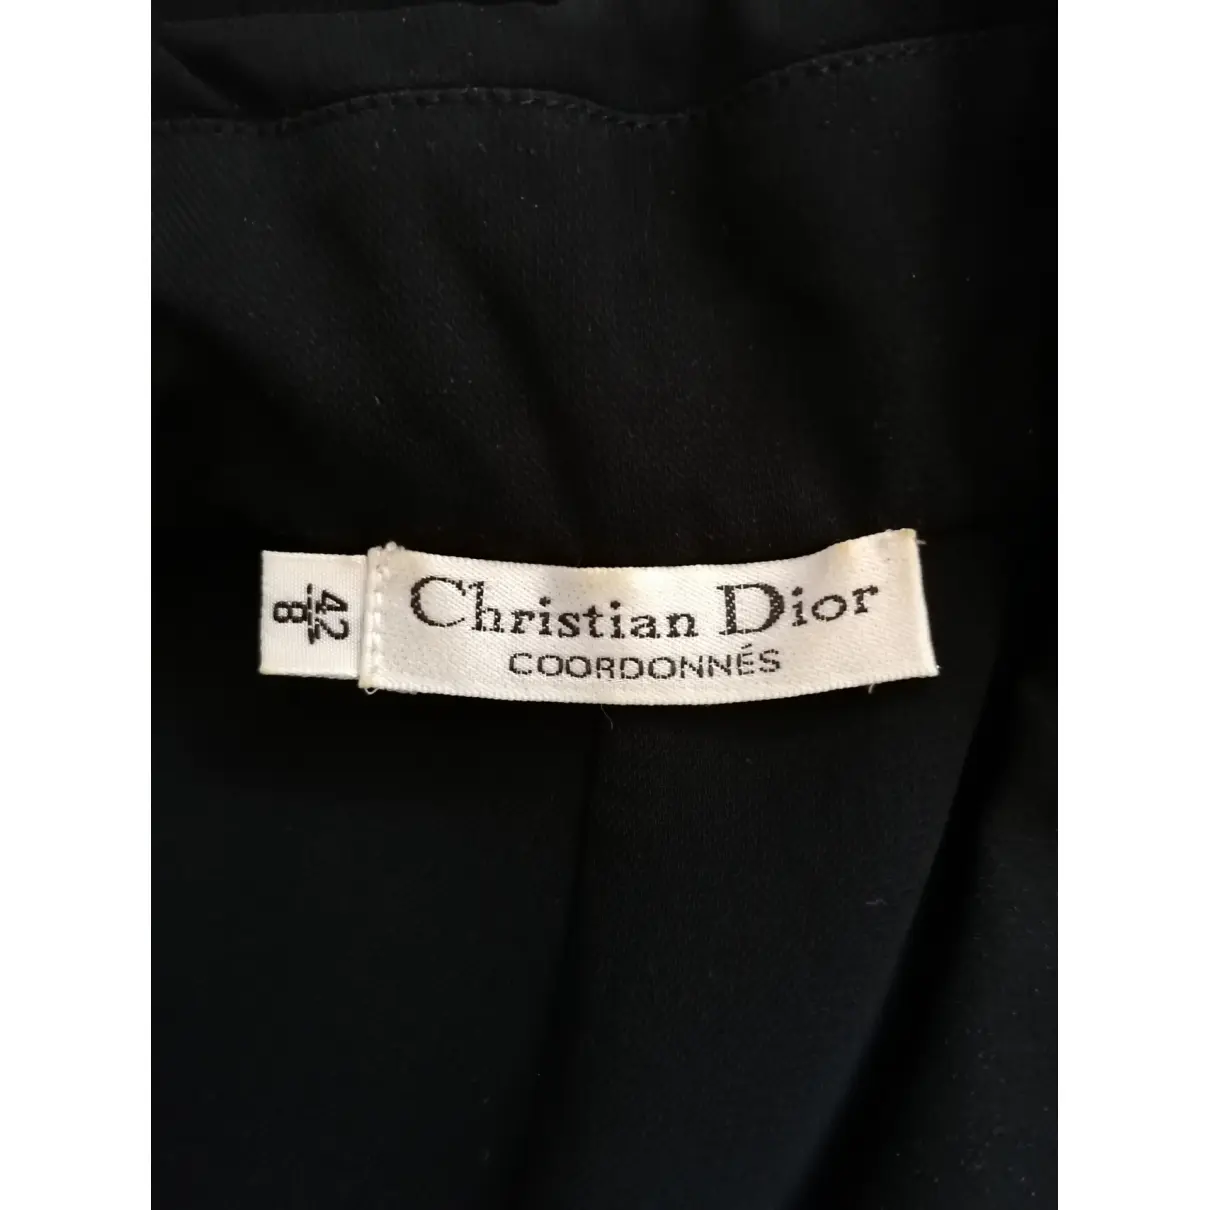 Blouse Christian Dior - Vintage